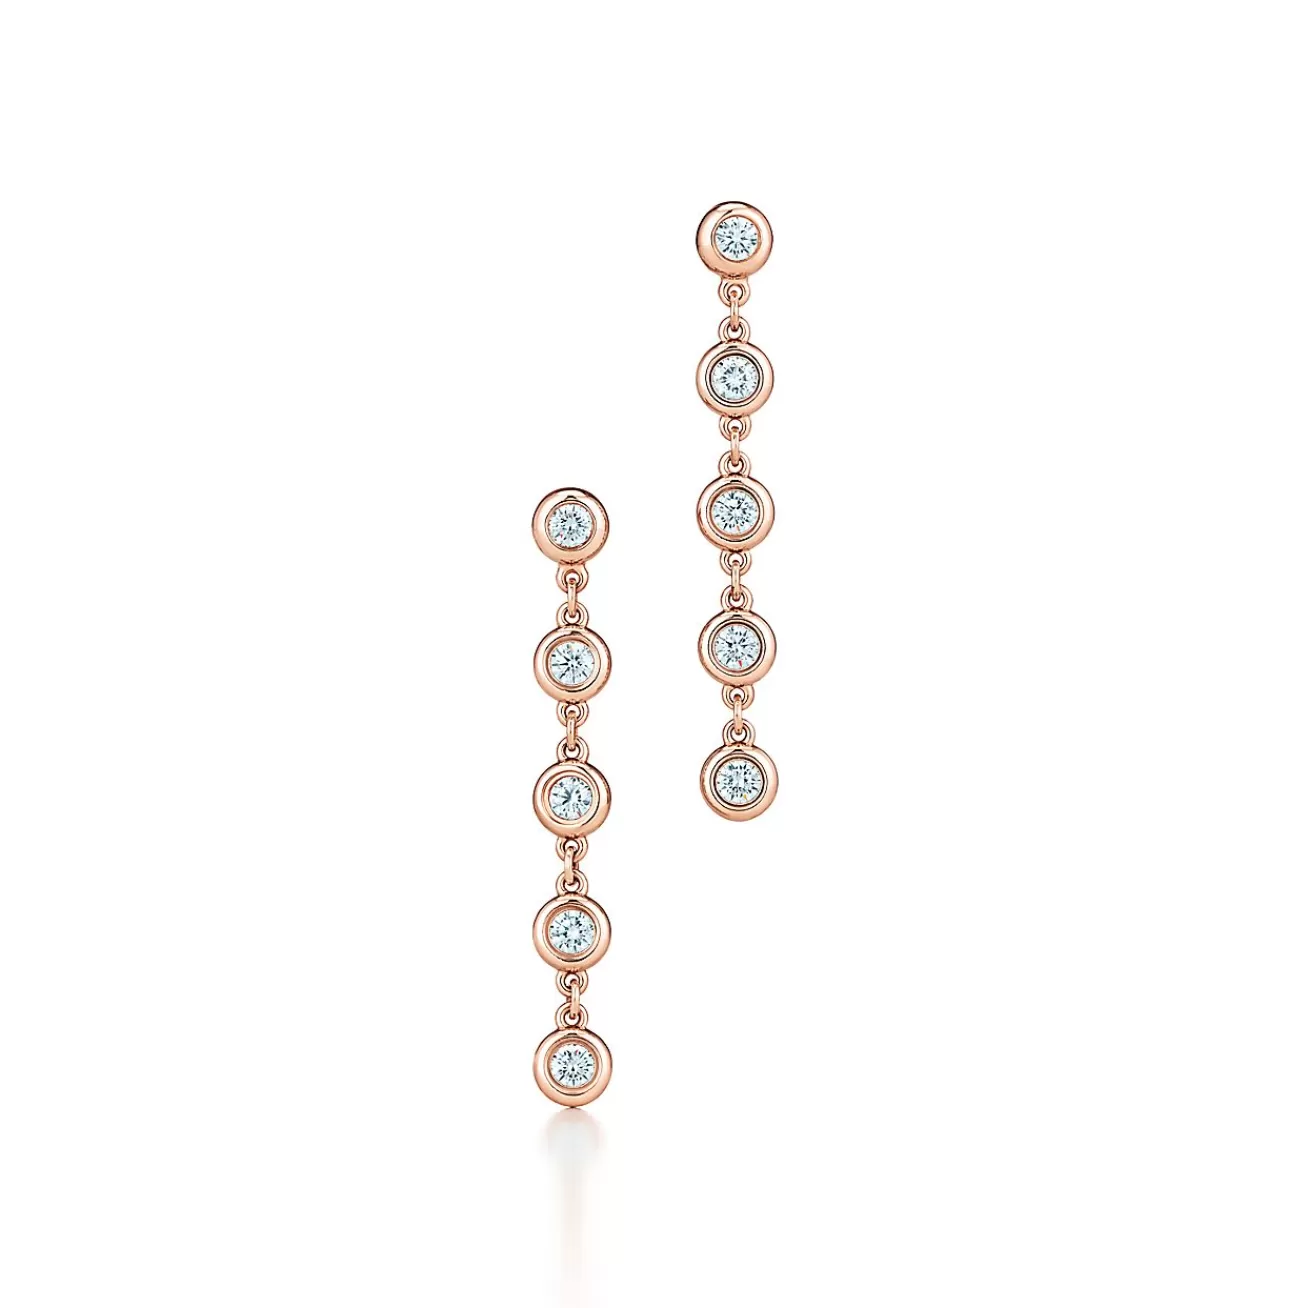 Tiffany & Co. Elsa Peretti® Diamonds by the Yard® drop earrings in rose gold with diamonds. | ^ Earrings | Rose Gold Jewelry